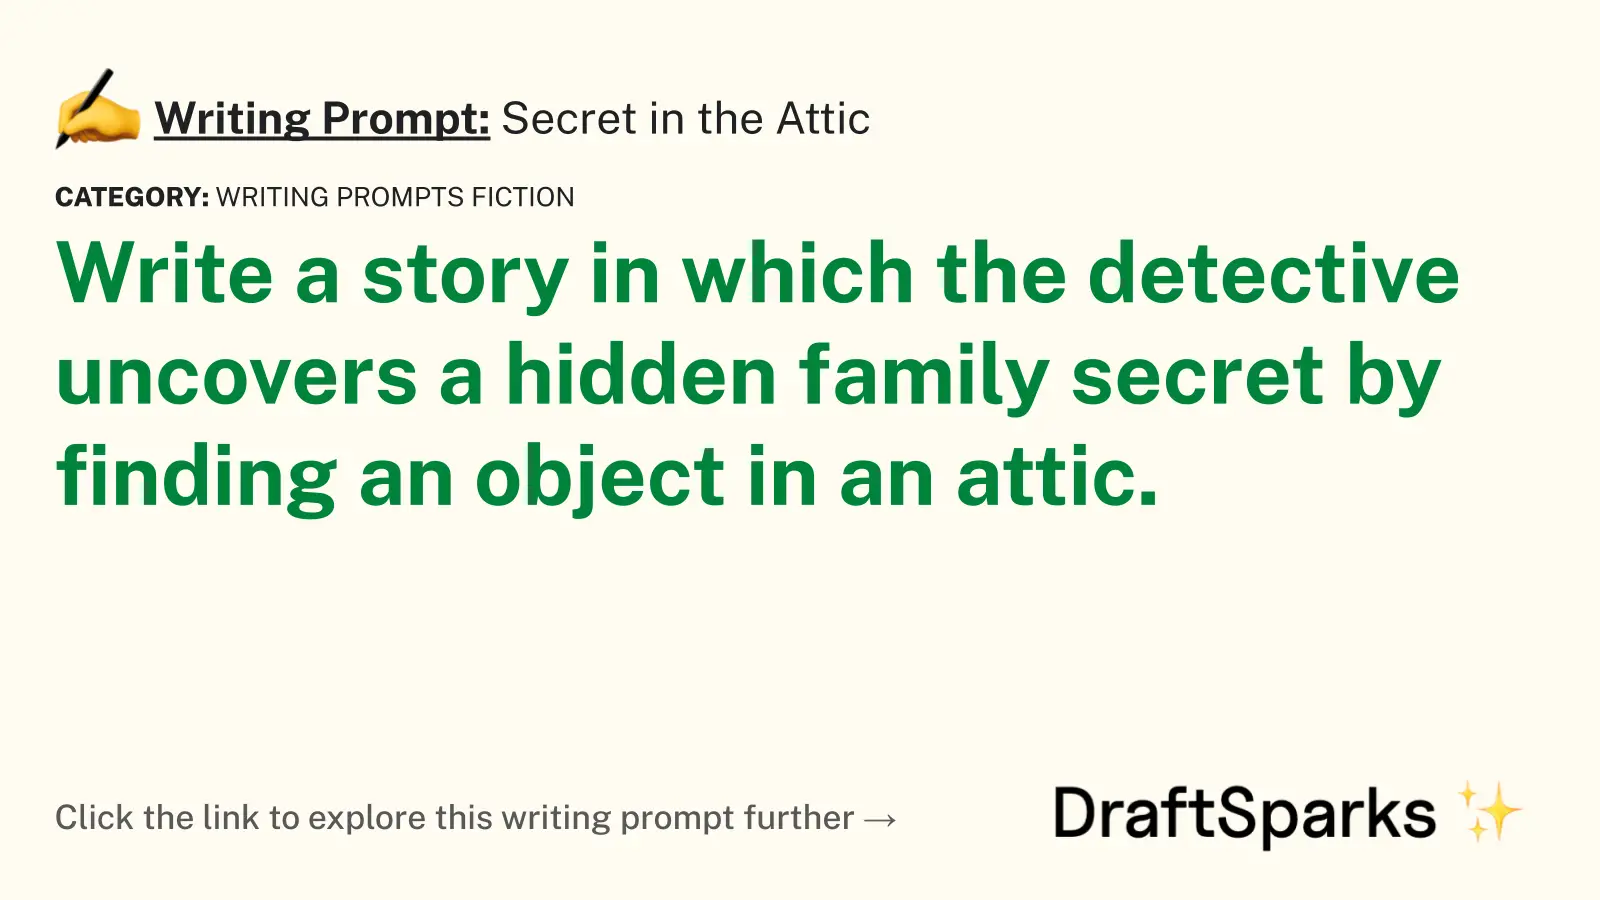 Secret in the Attic